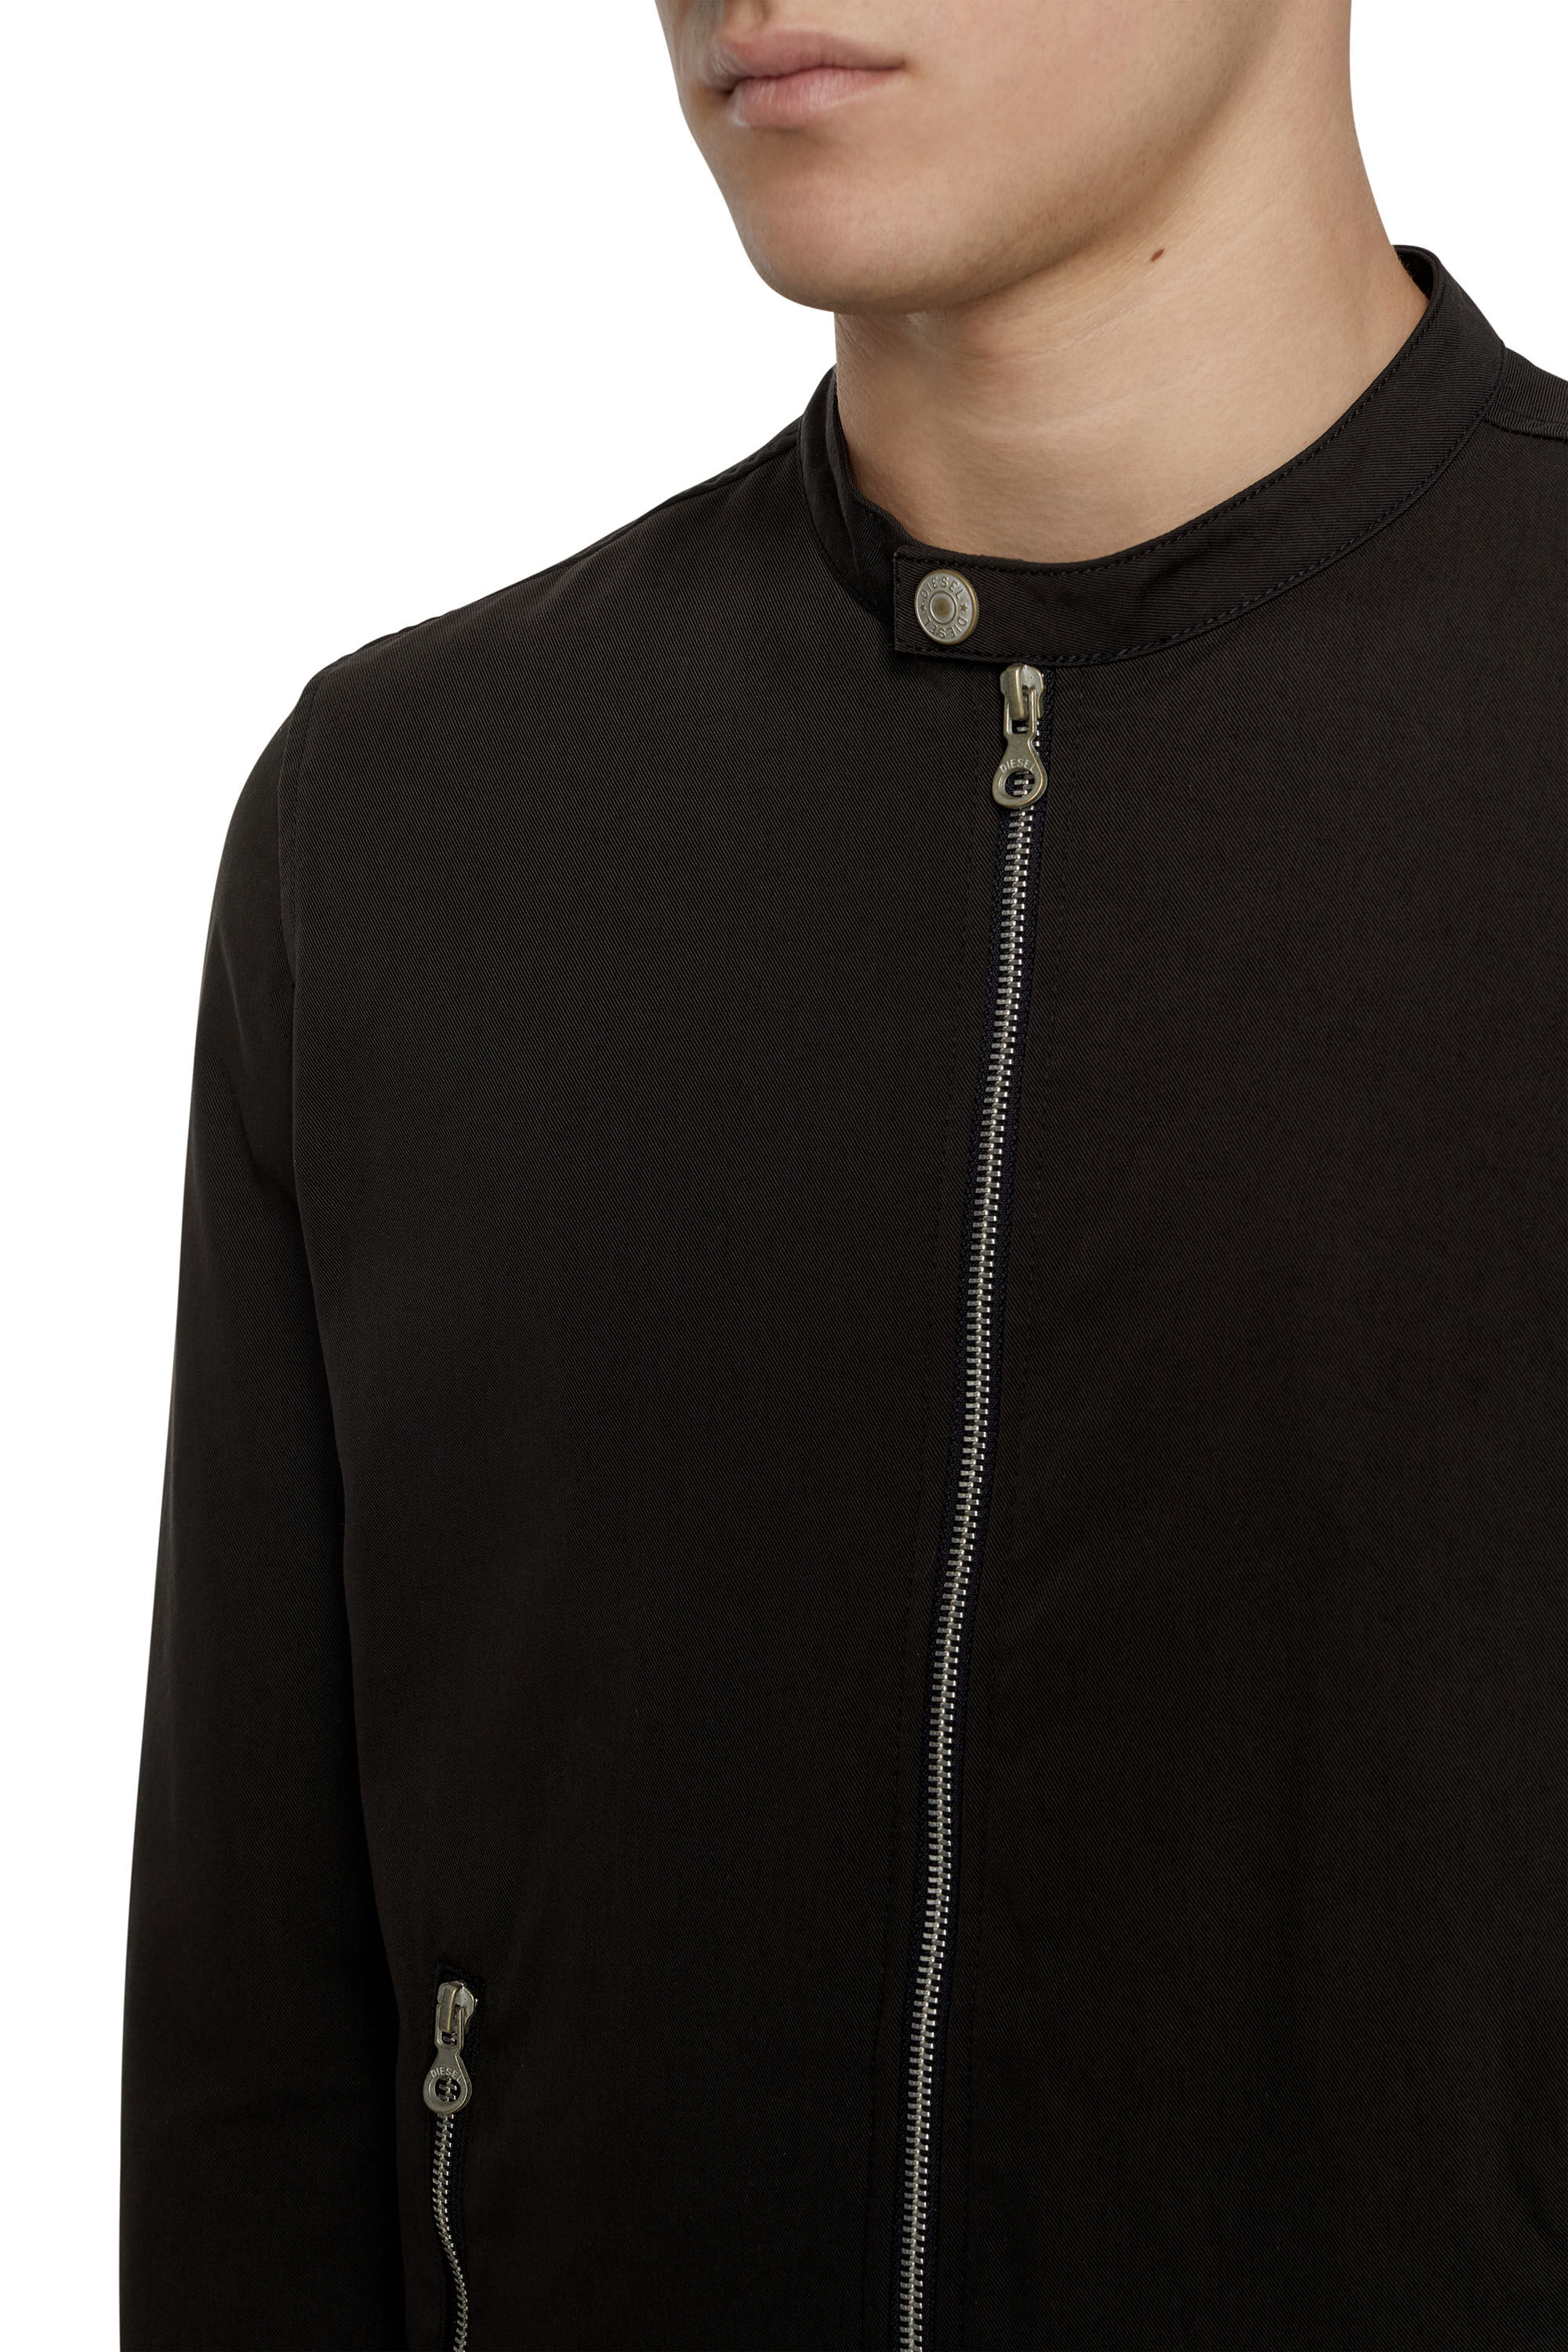 Diesel - J-GLORY-NW, Man Biker jacket in cotton-touch nylon in Black - Image 6